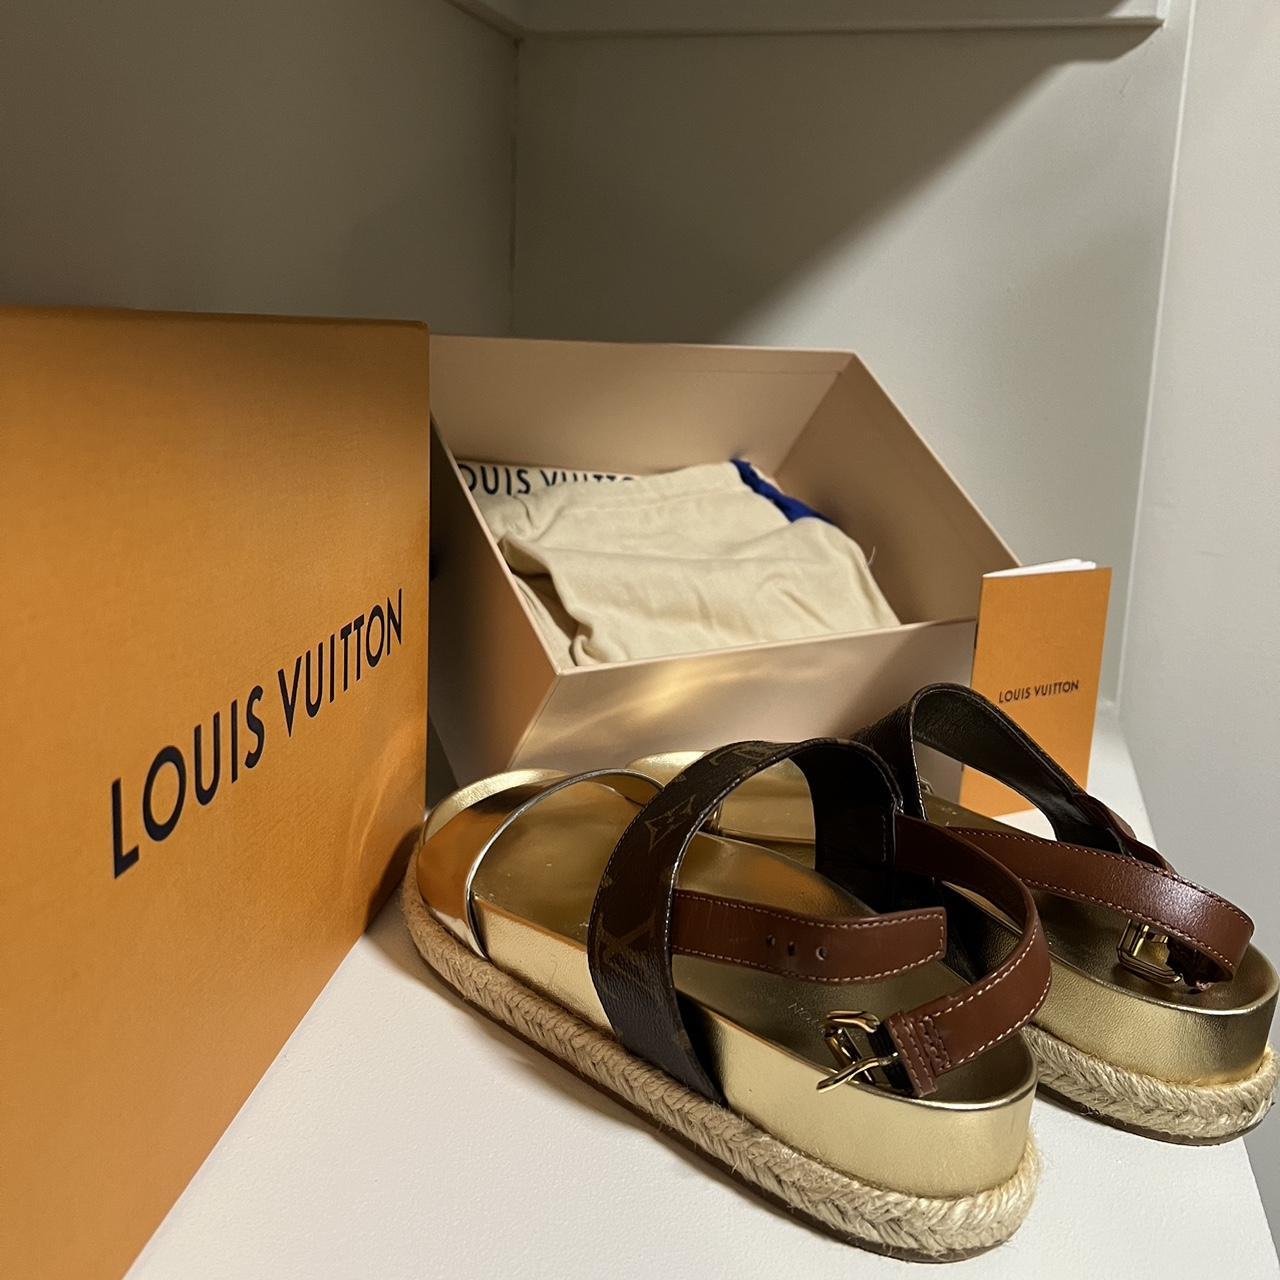 LV gladiator sandals 2018 worn minimally - Depop